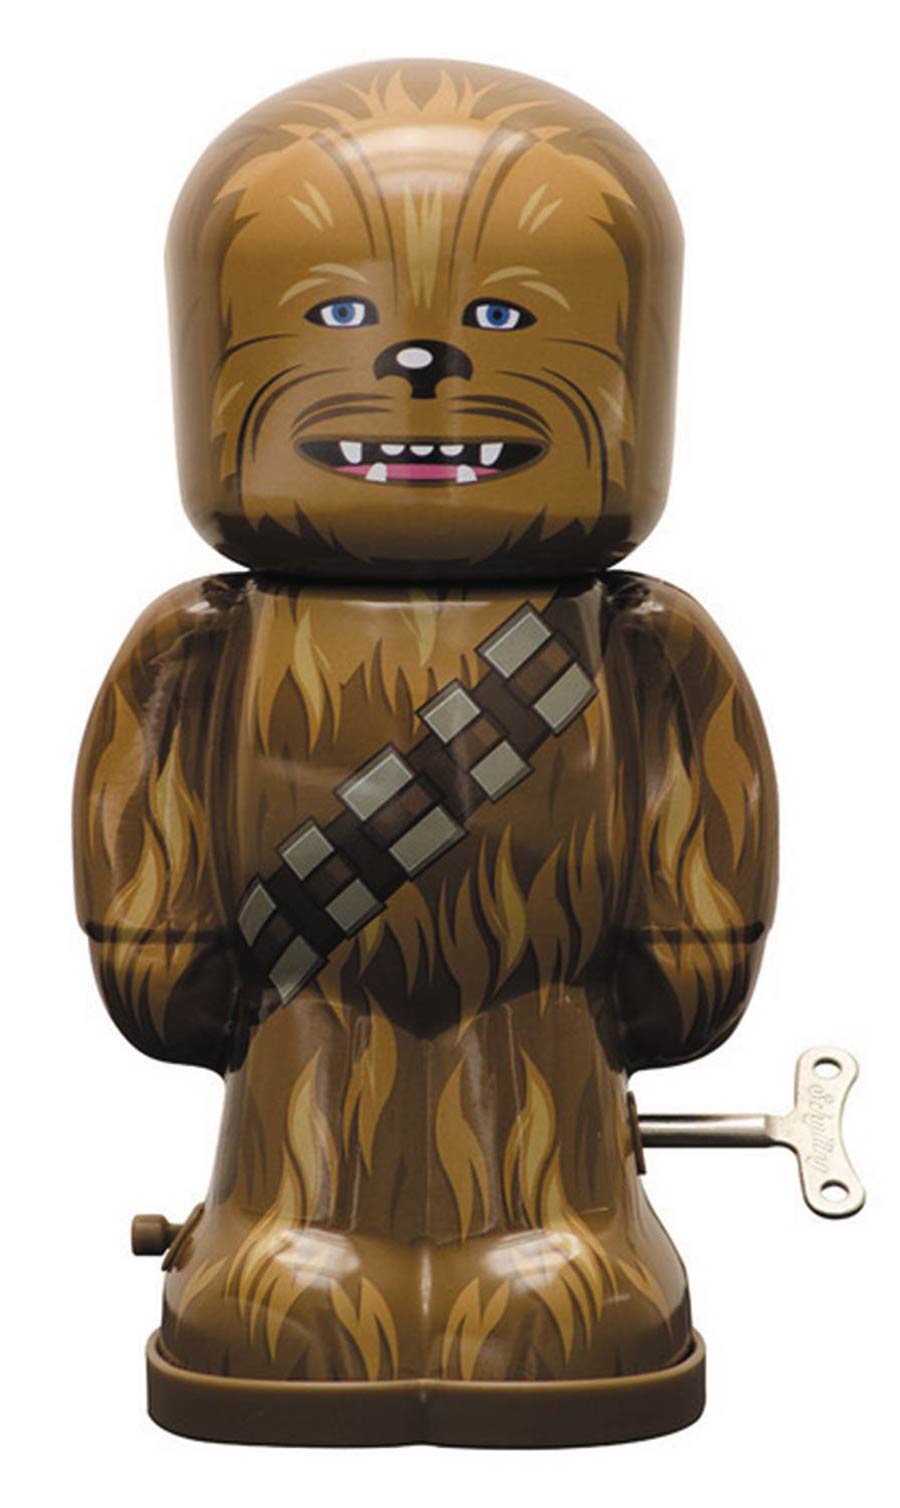 Star Wars Wind-Up Tin Toy - Chewbacca